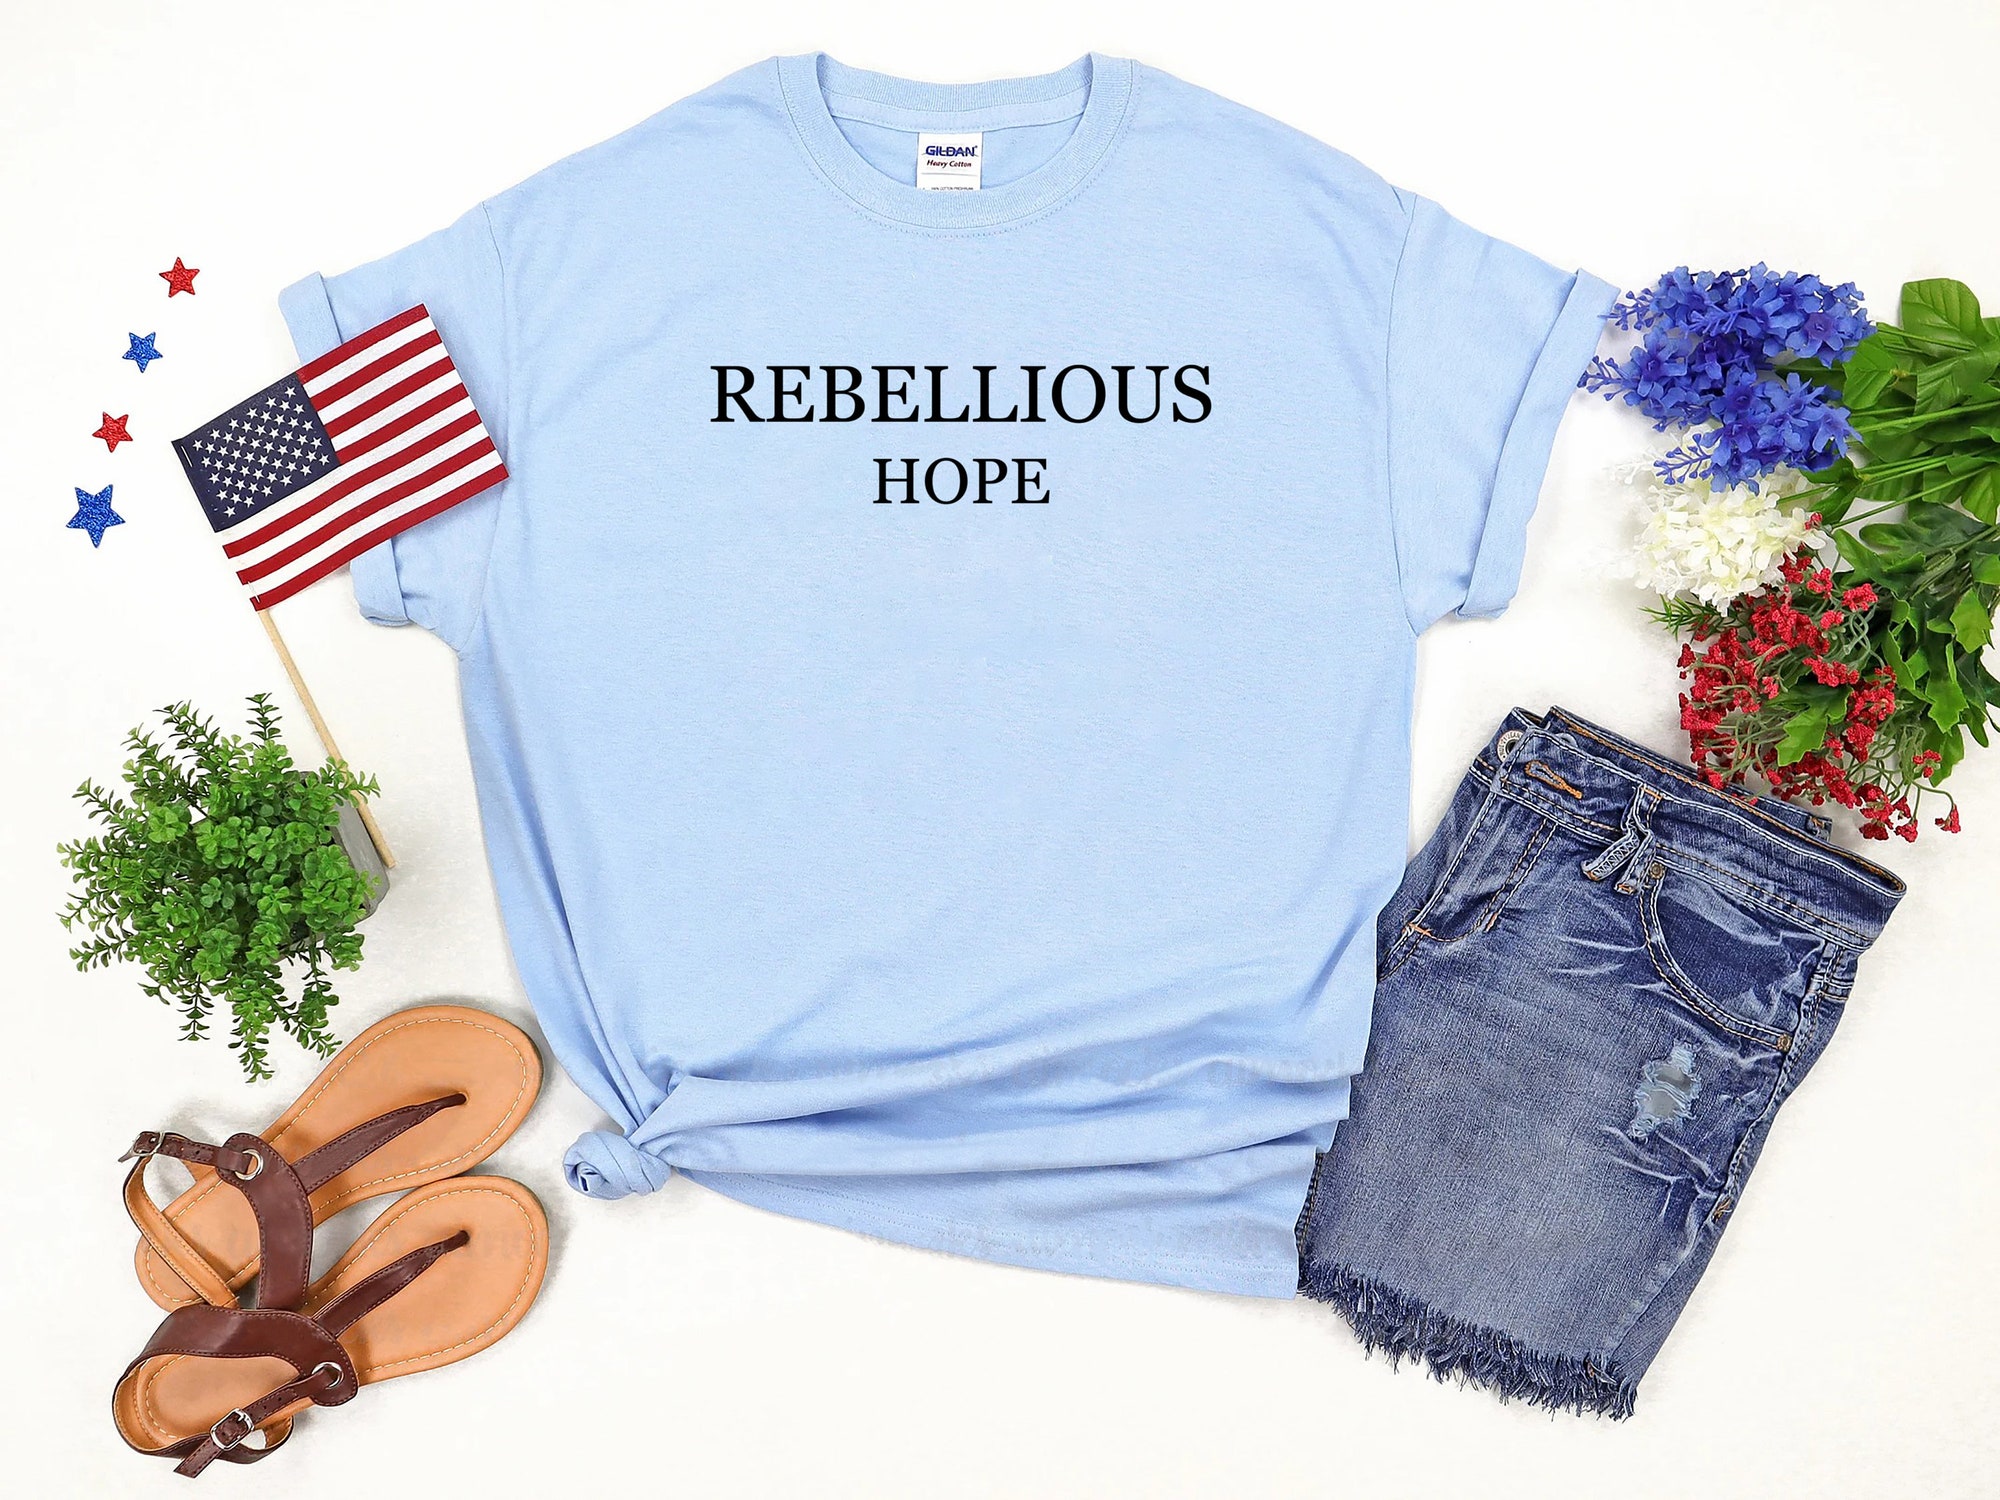 Discover Rebellious Hope, Deborah James T-shirt